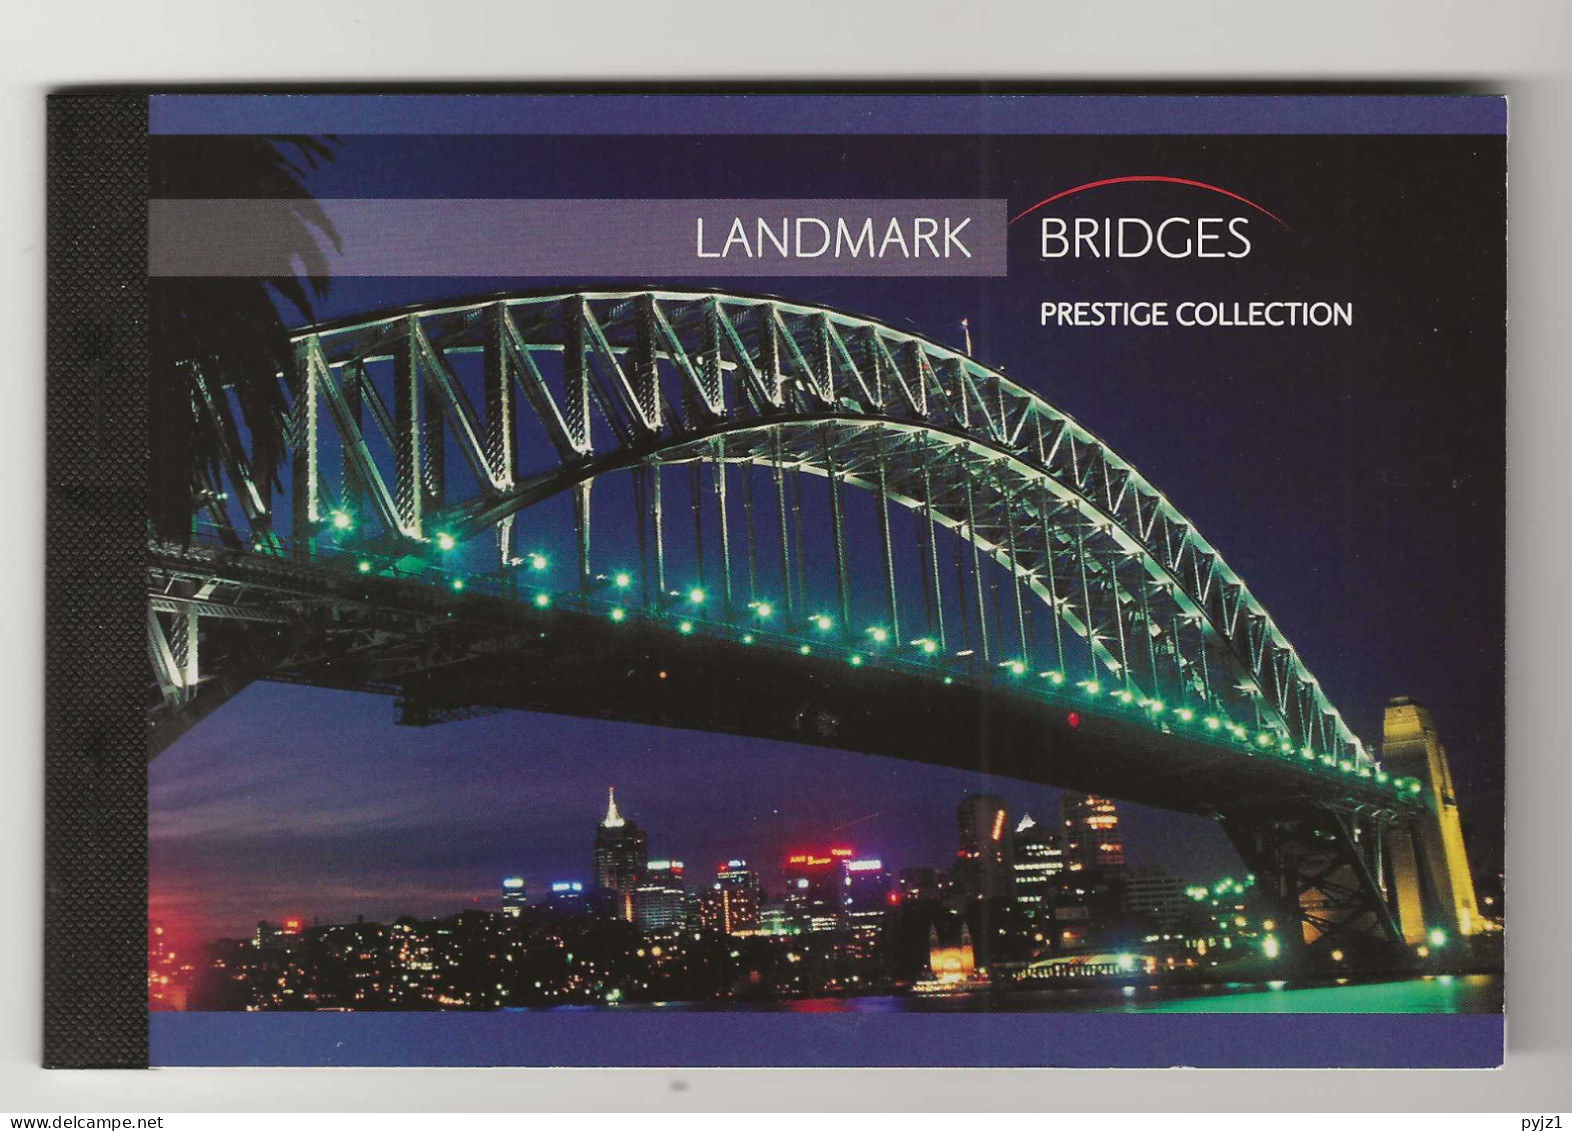 2004 MNH Australia Prestige Booklet, Michel MH-180 - Booklets